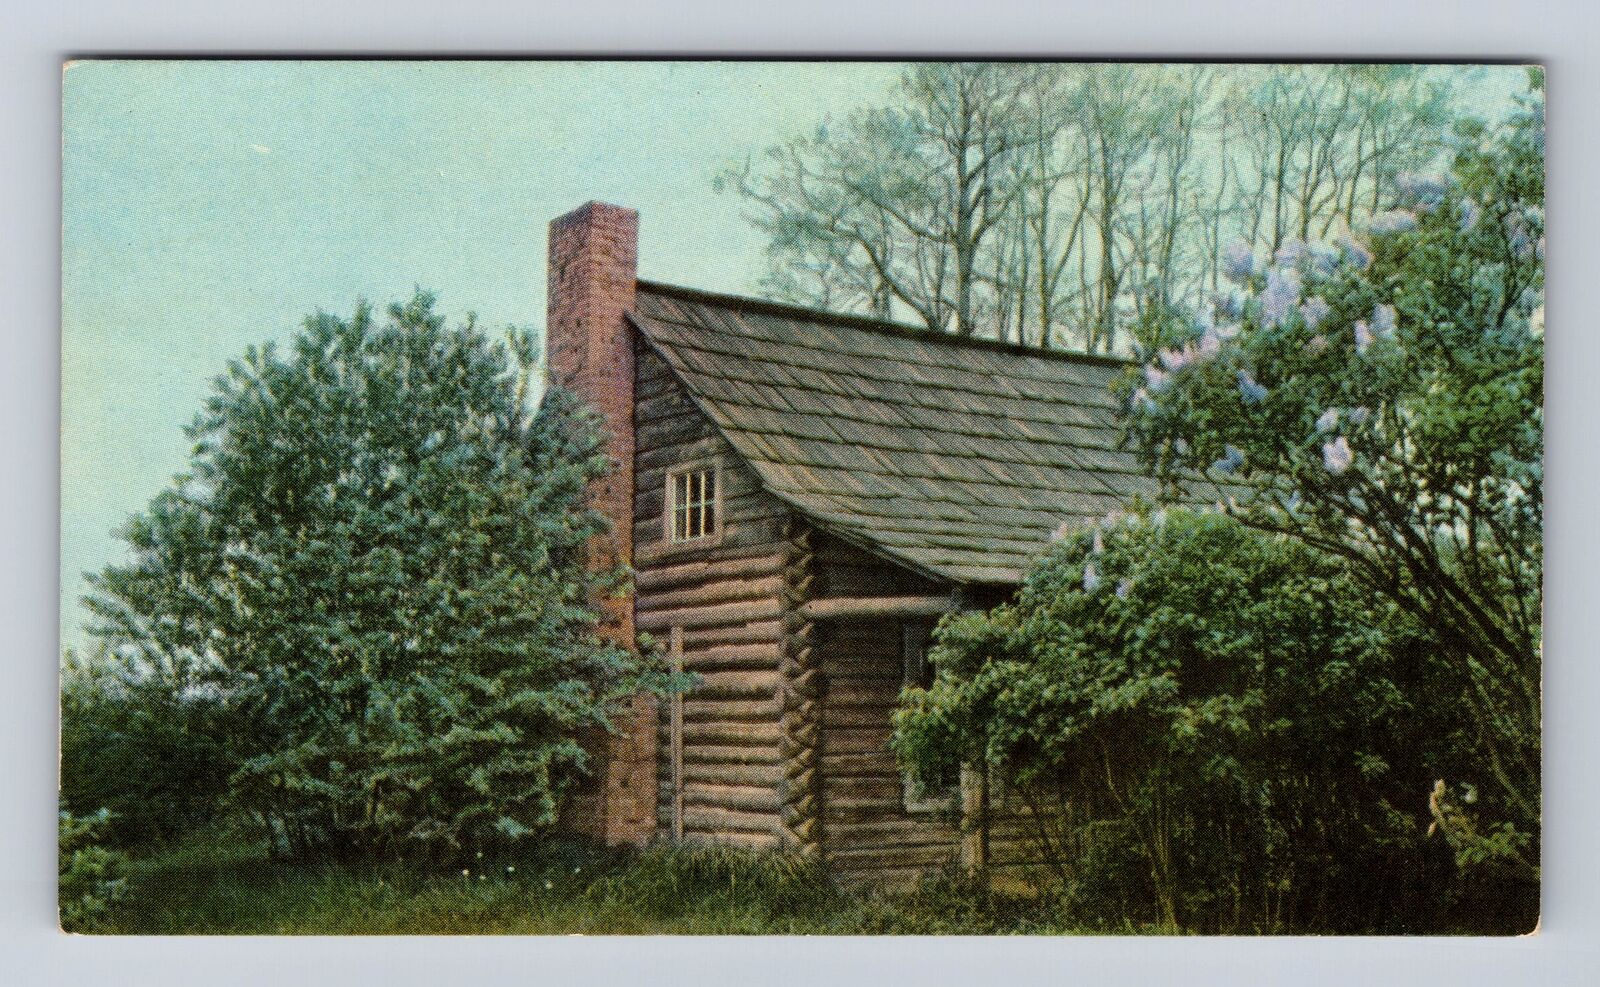 OR-Oregon, John Jackson House, Antique, Vintage Souvenir Postcard